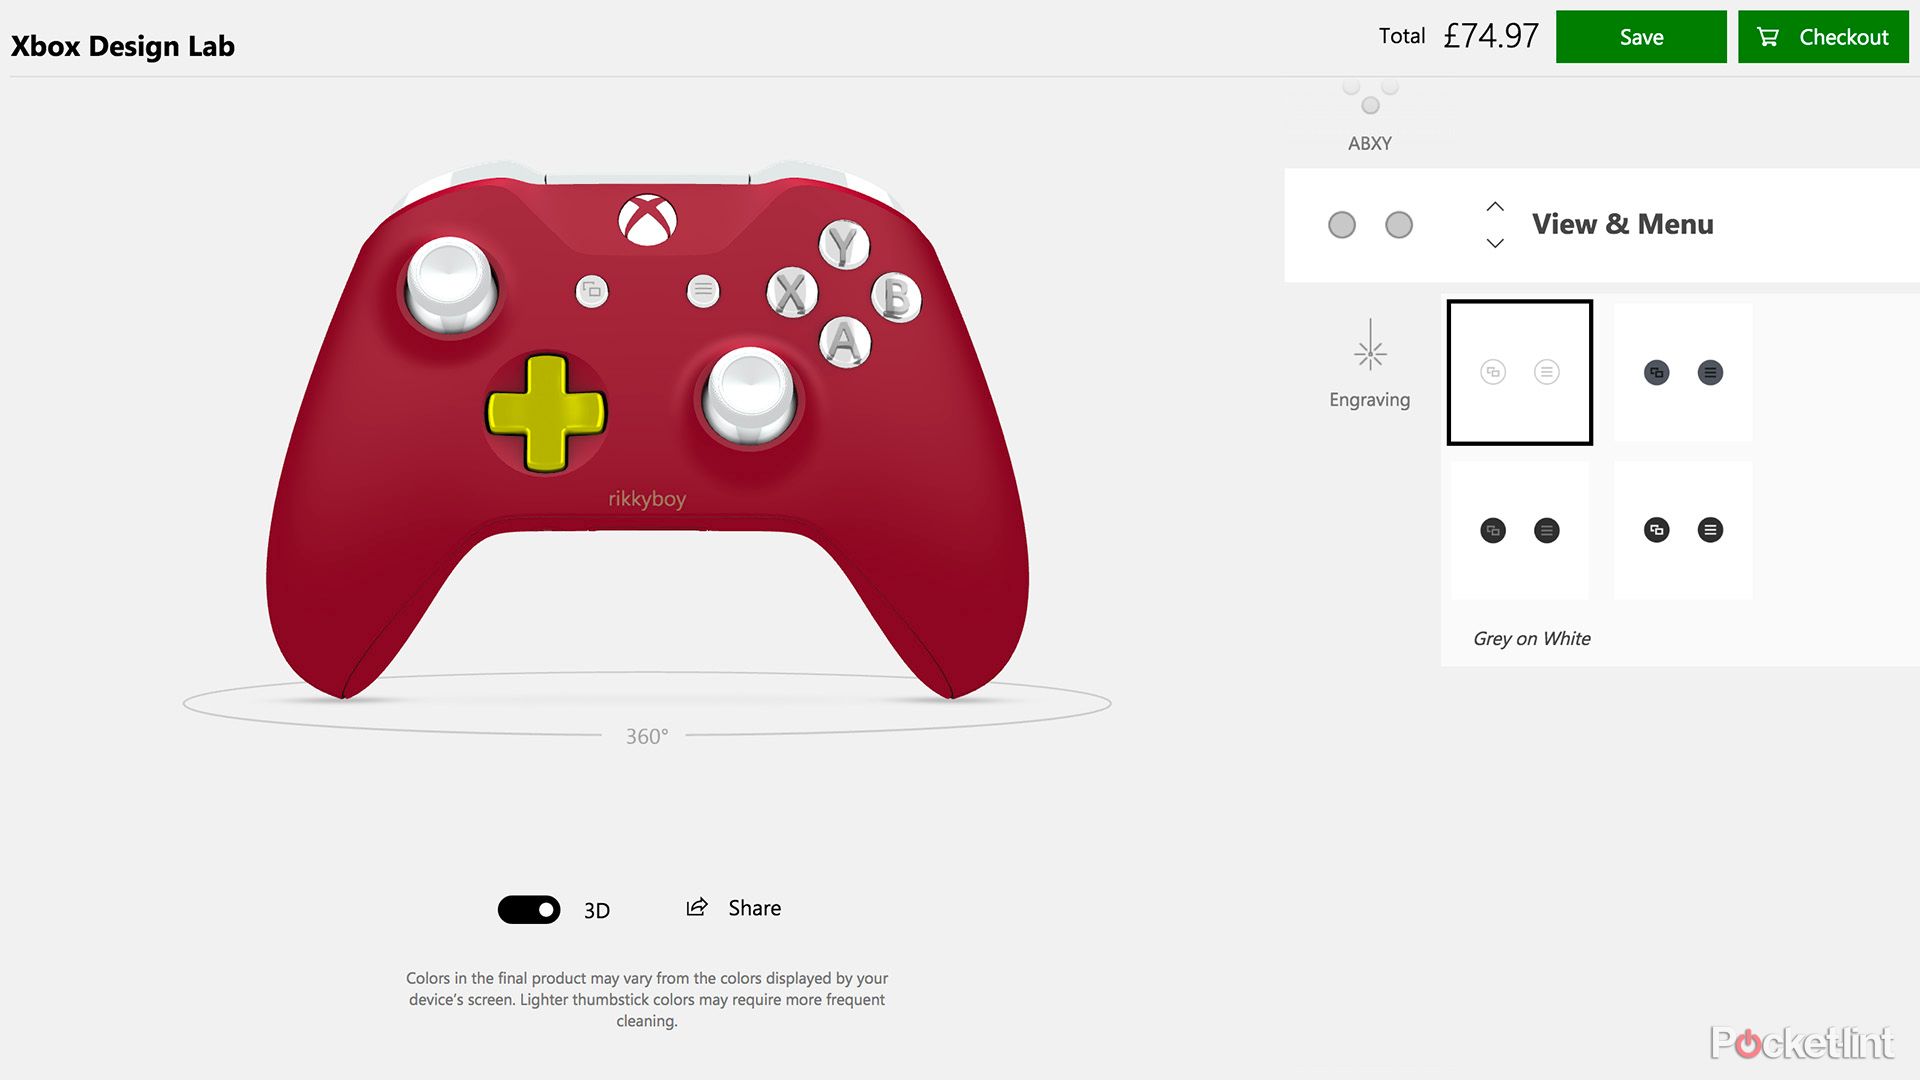 Xbox One Design Lab screens image 8